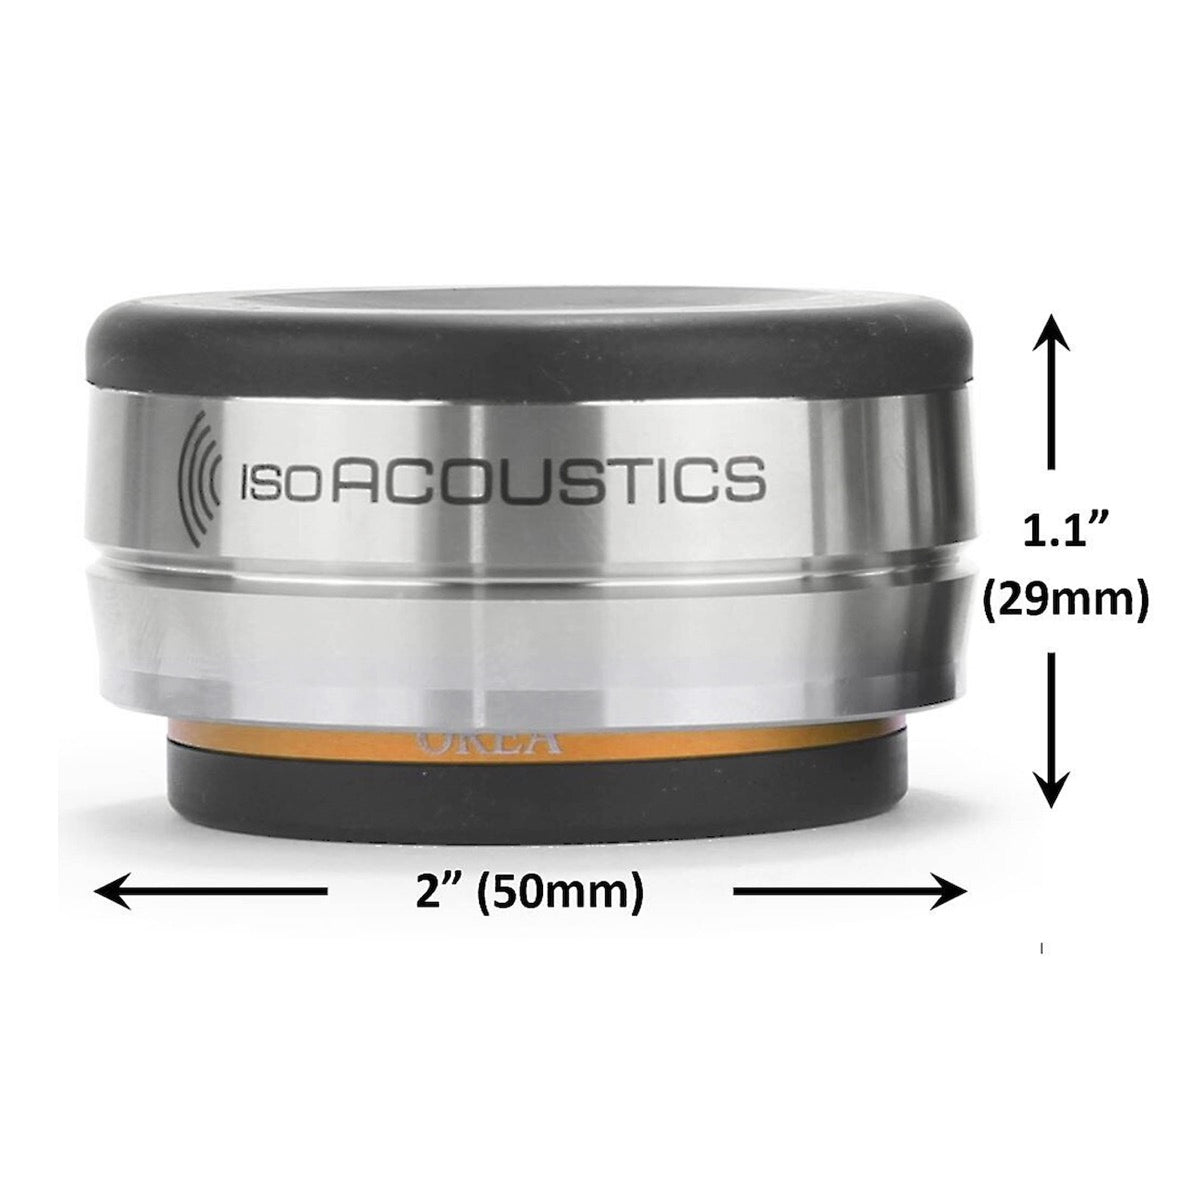 IsoAcoustics OREA Bronze - Isolator for Audio Equipment - Single Piece - AVStore